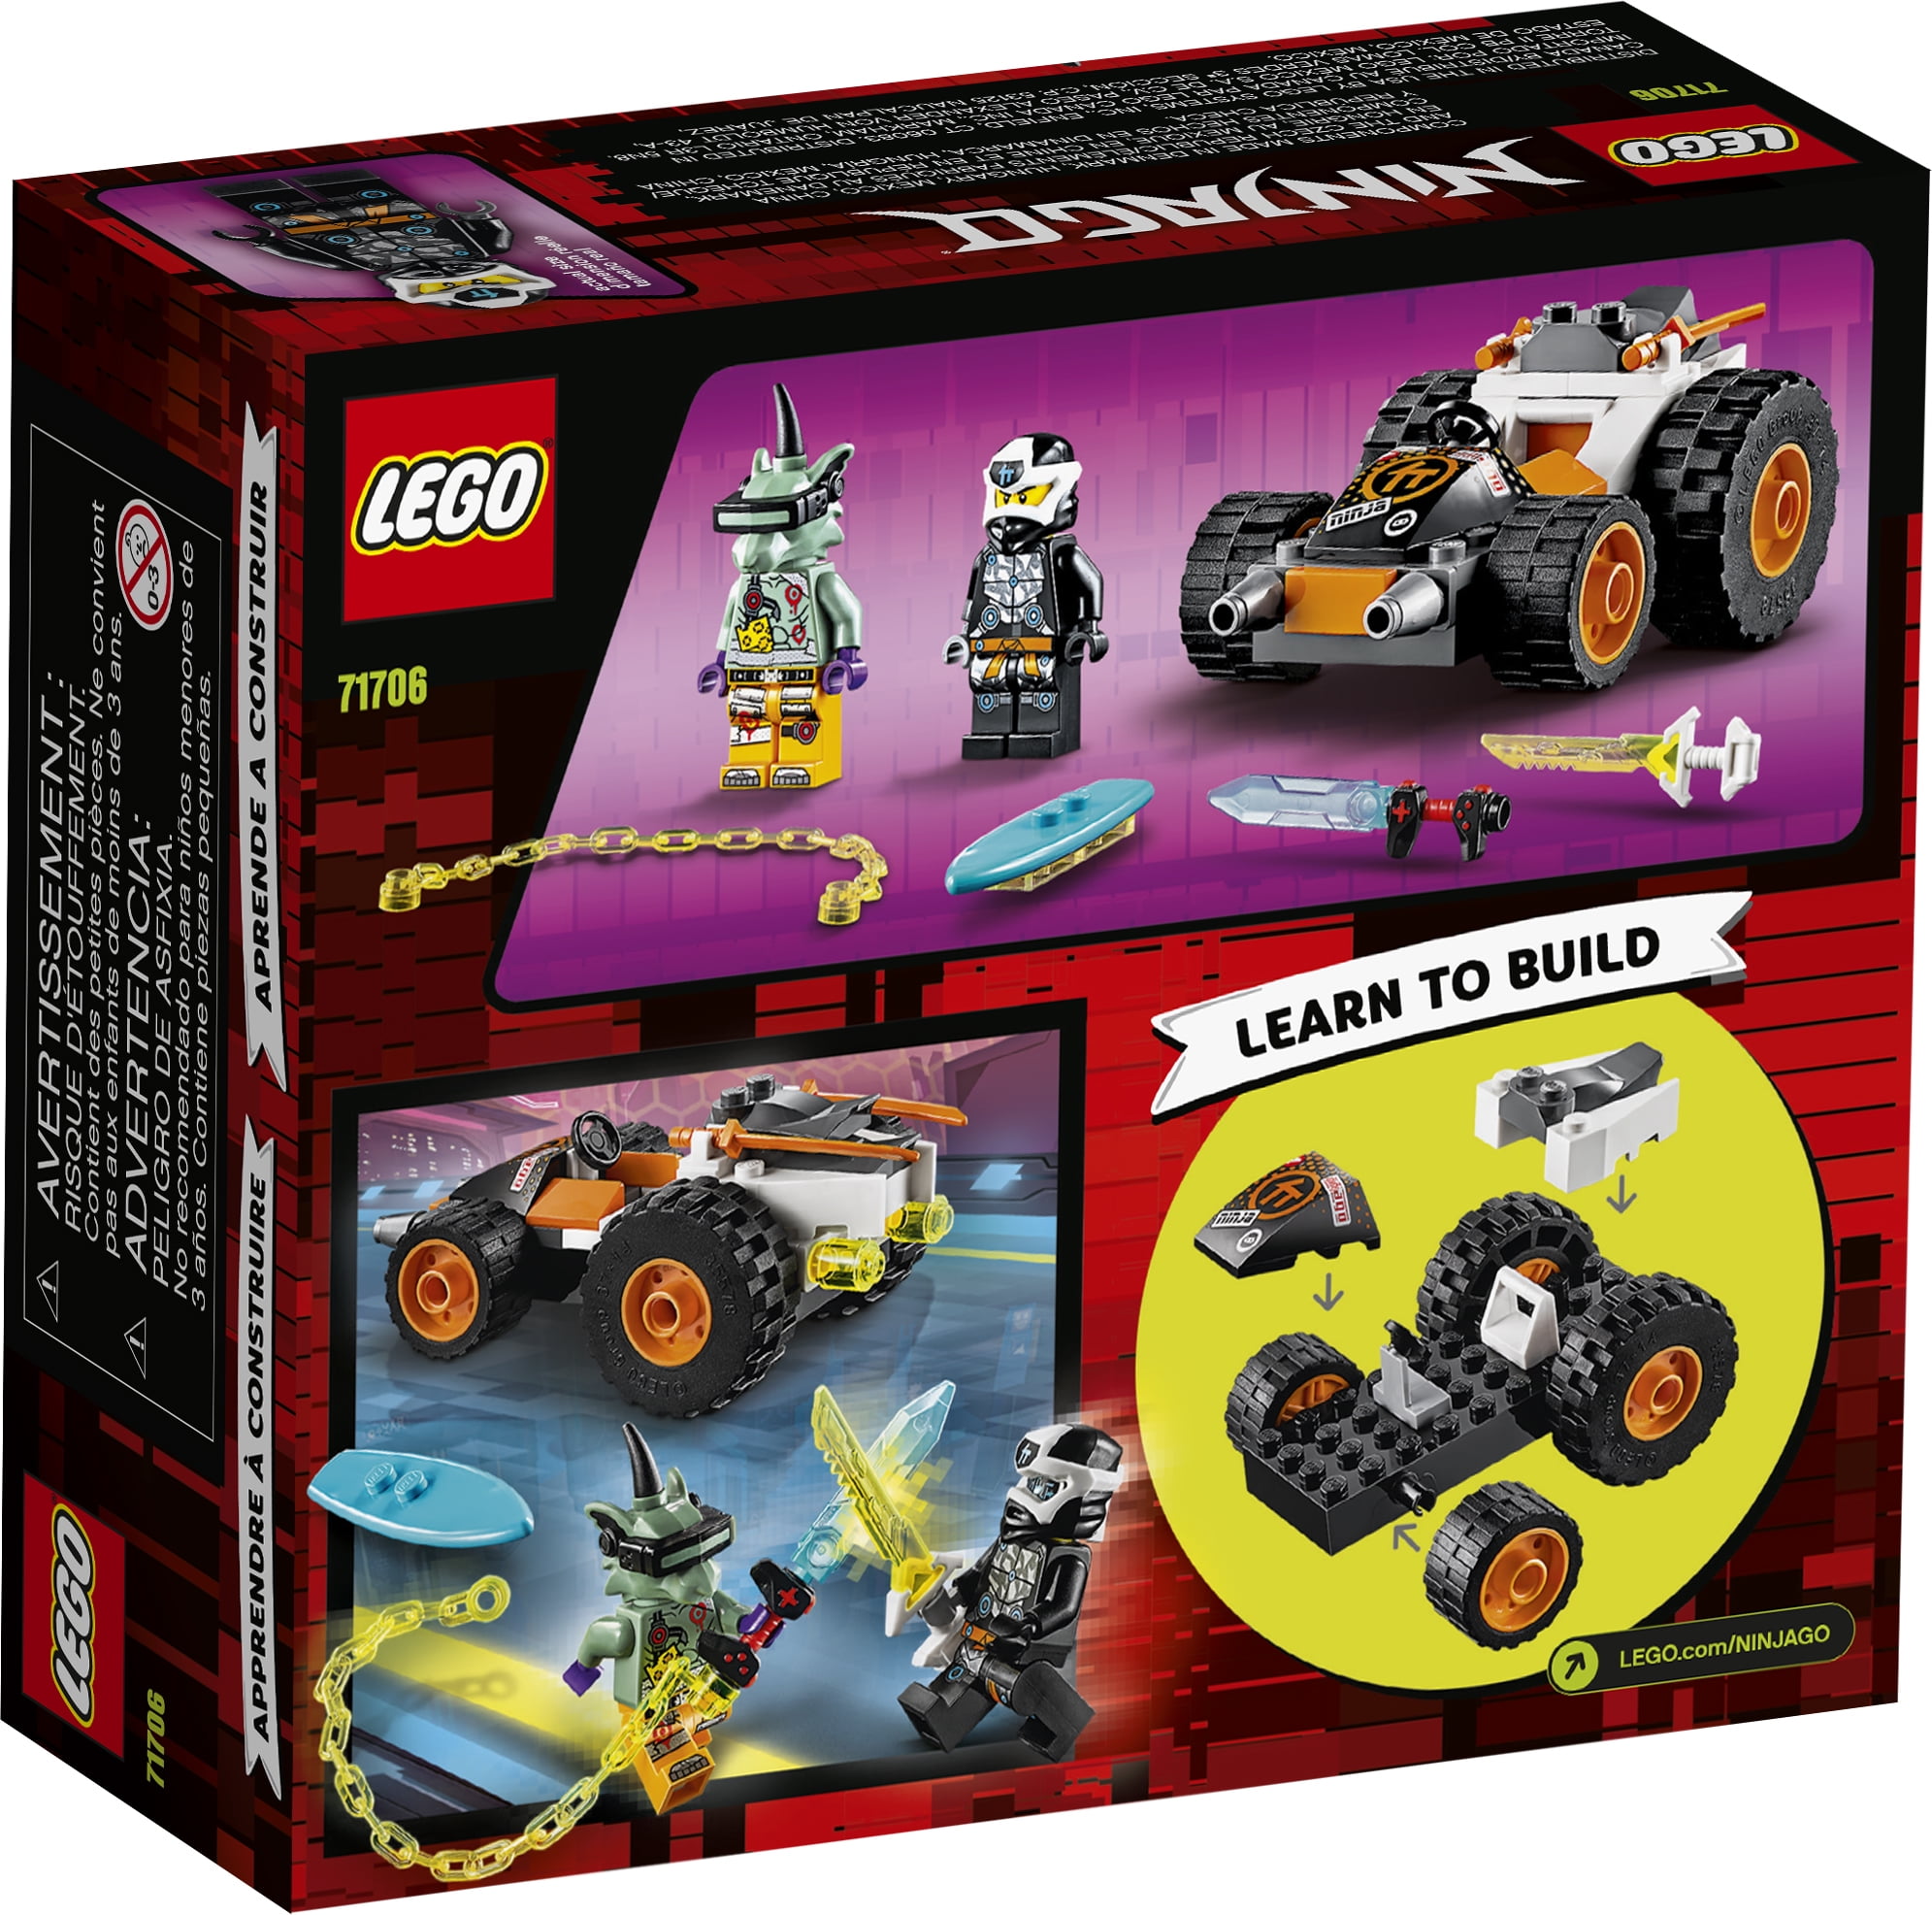 LEGO Cole/'s Speeder Car Ninjago for sale online 71706